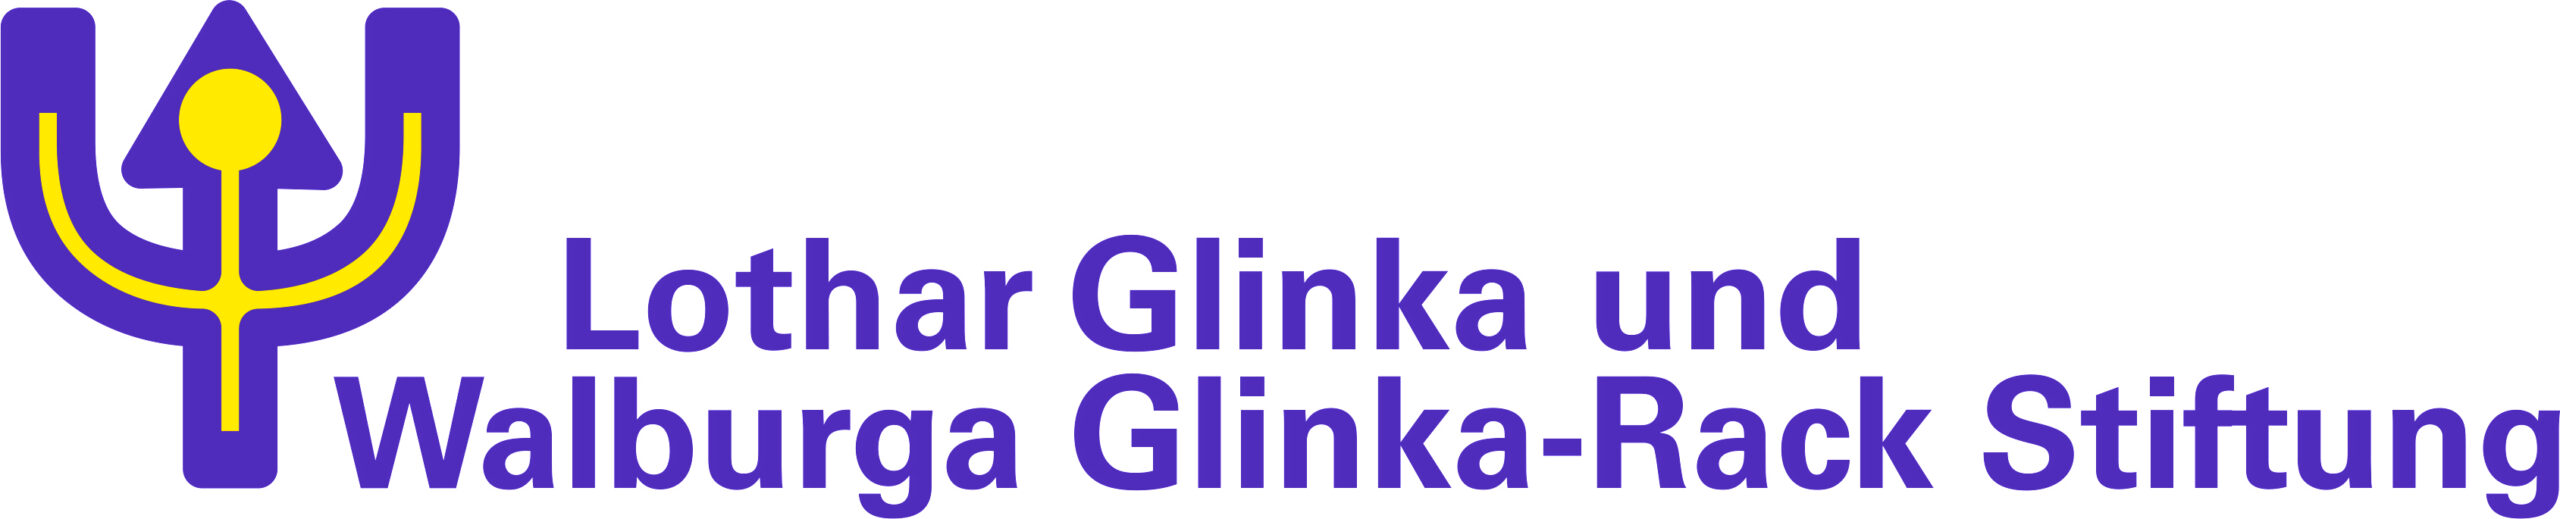 Lothar Glinka & Walburga Glinka-Rack-Stiftung